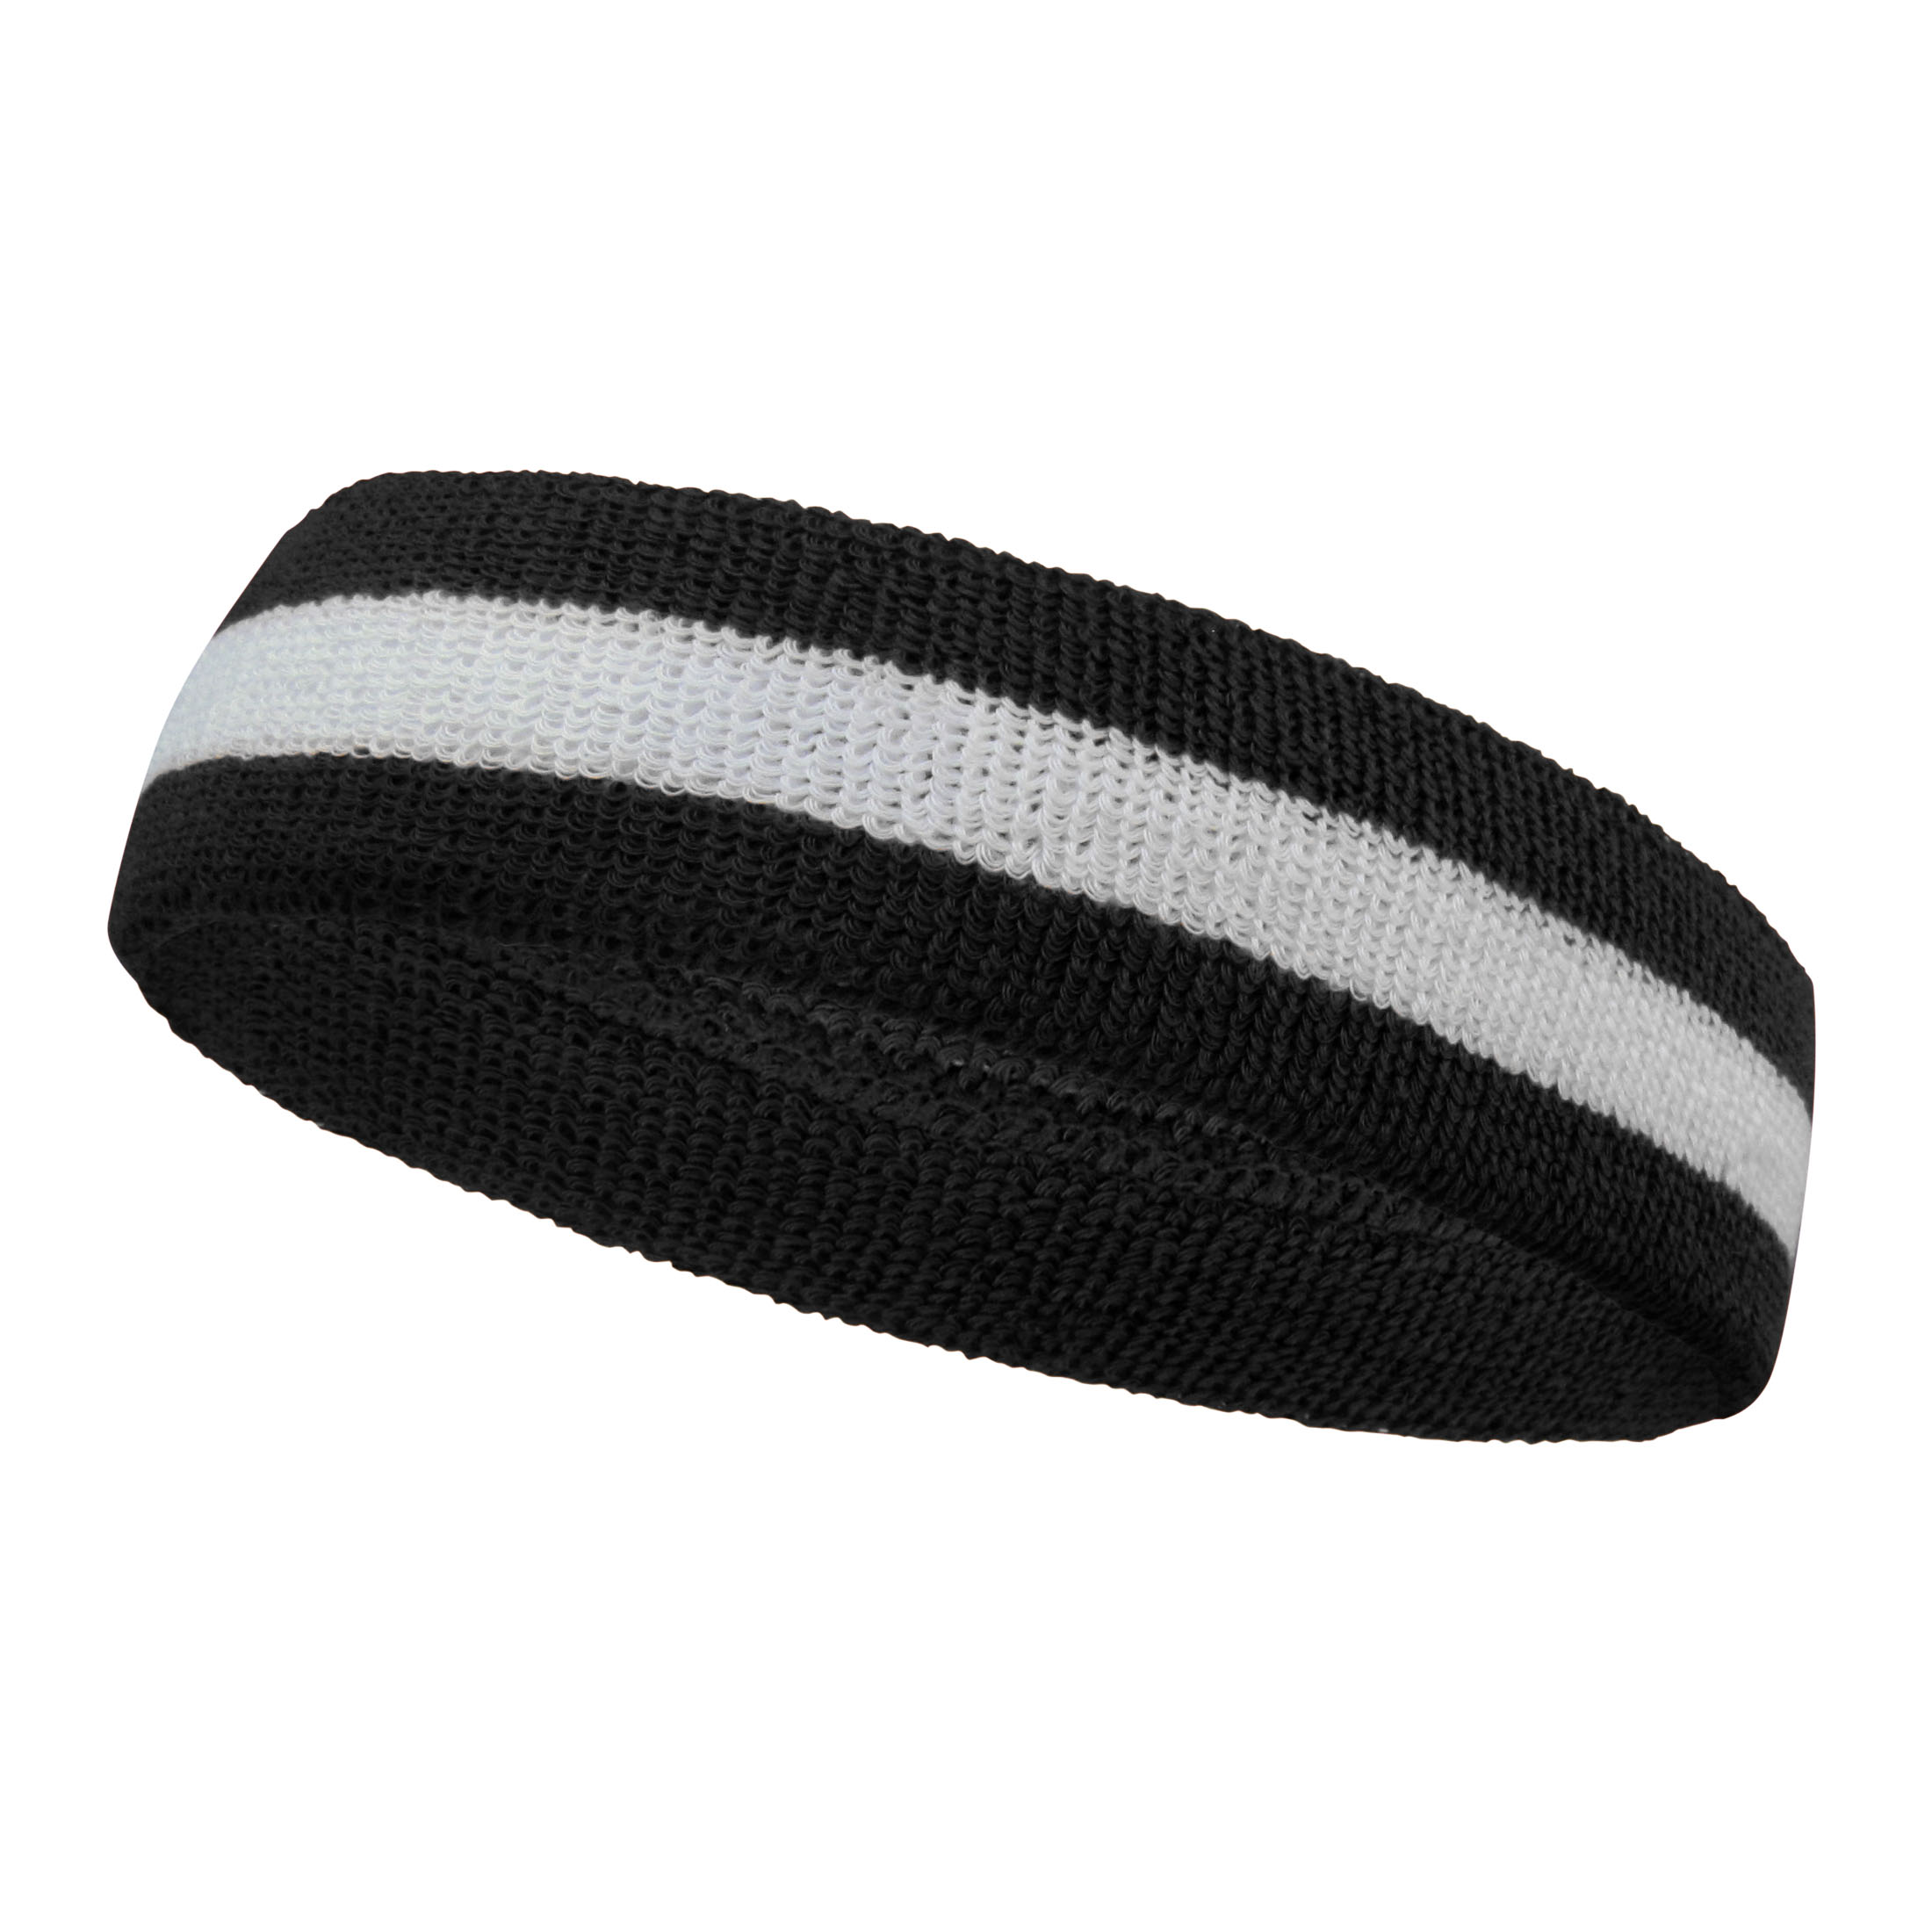 White with Black Striped Quality Headband, 1PC